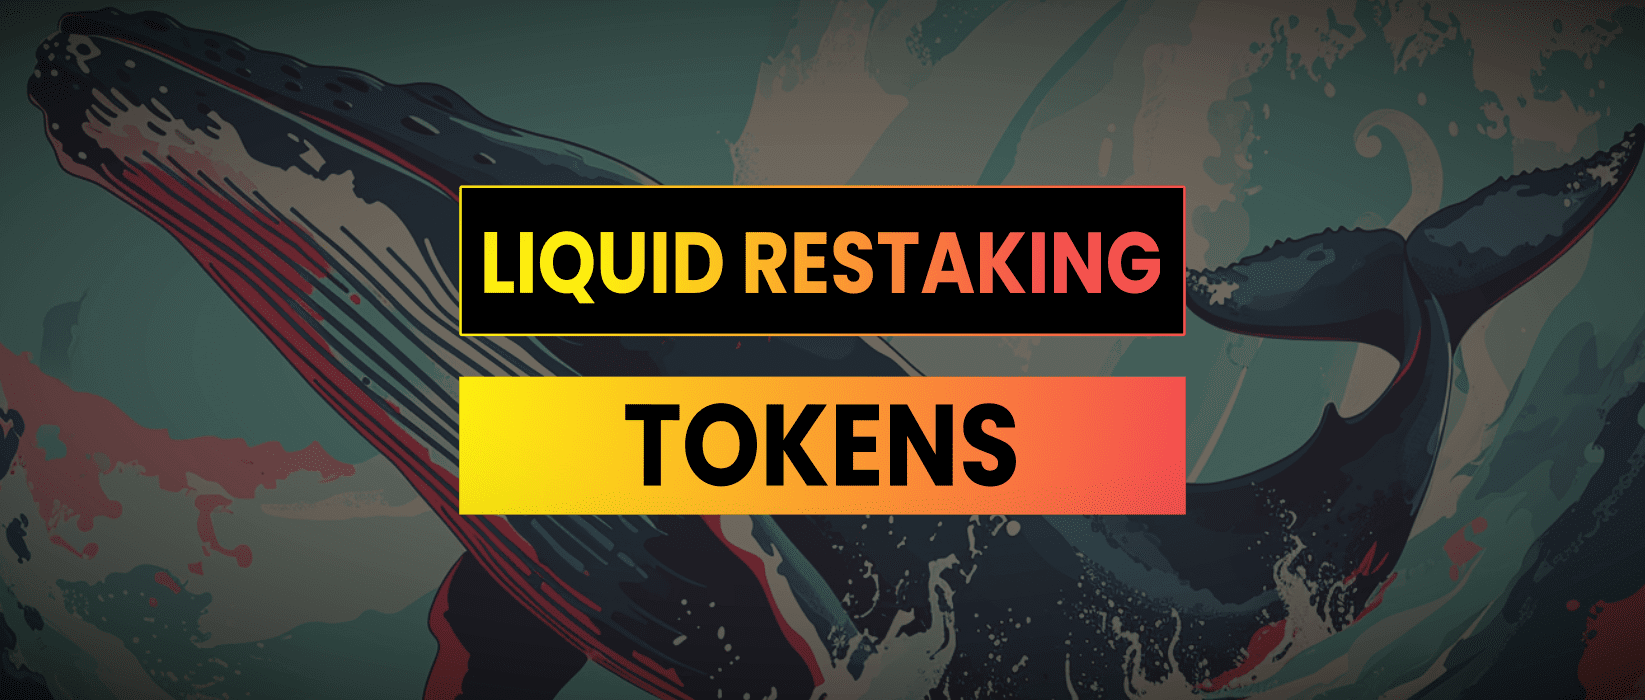 lrts liquid restaking tokens